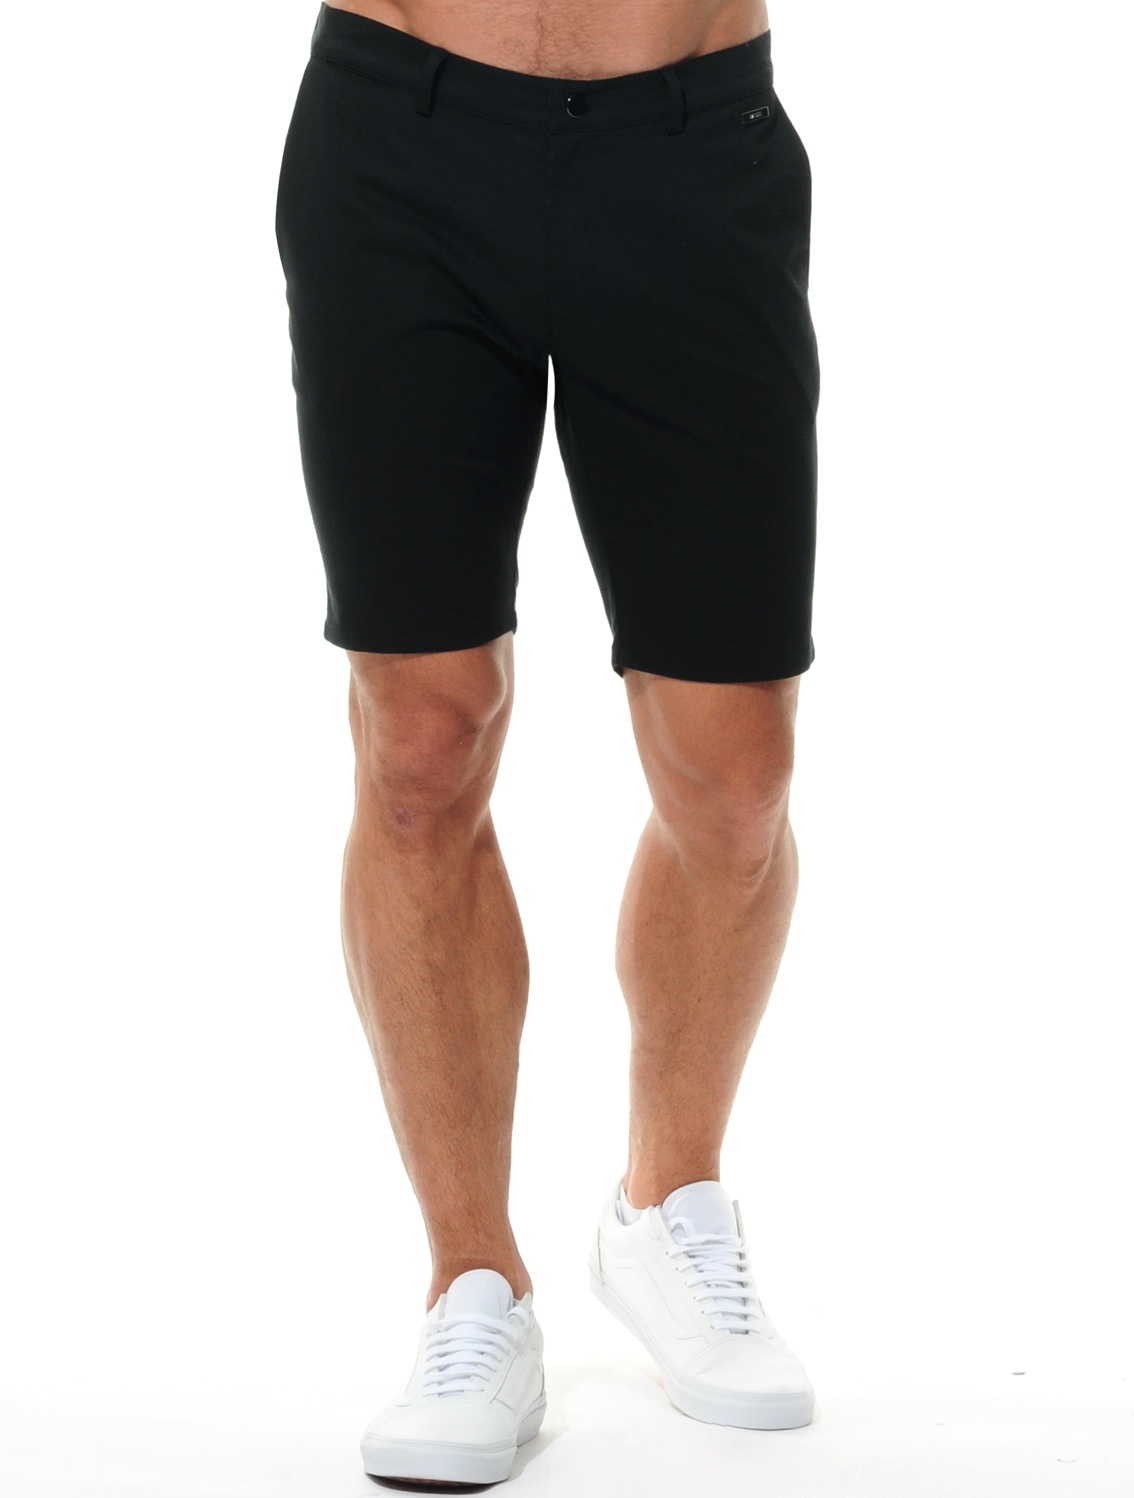 4way stretch slim shorts black 